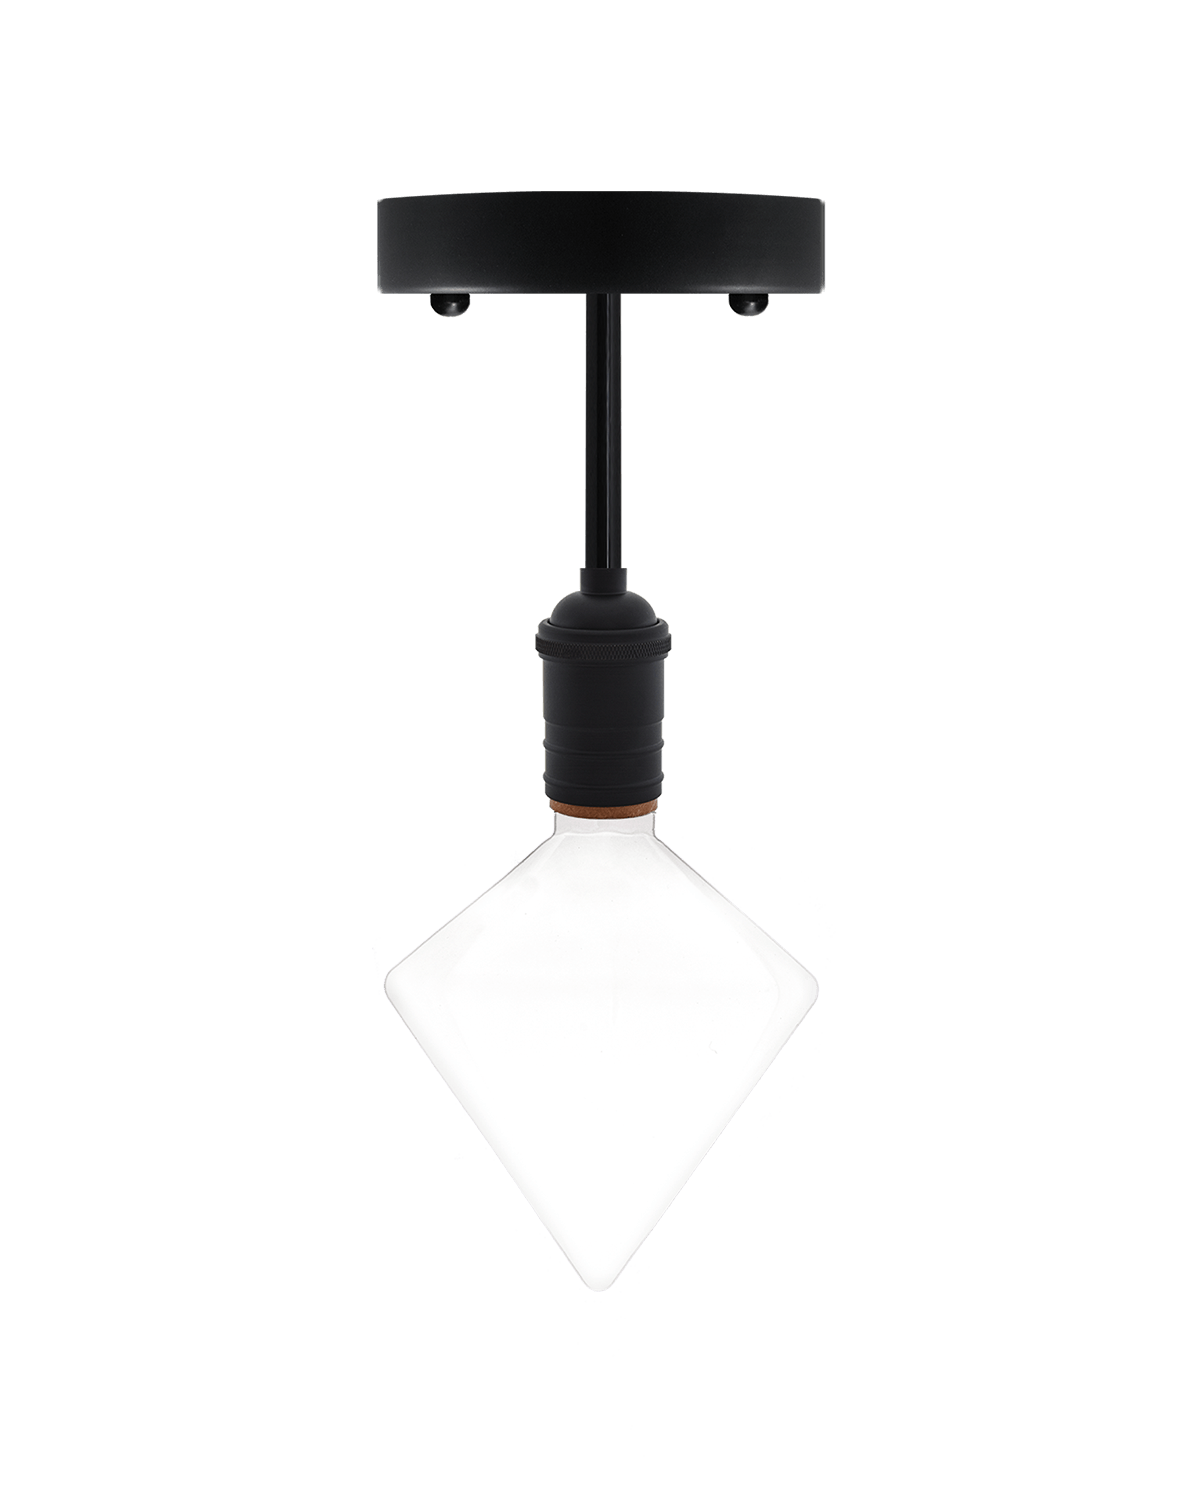 Semi-flush mount light fixture with a black base and a unique diamond-shaped bulb.